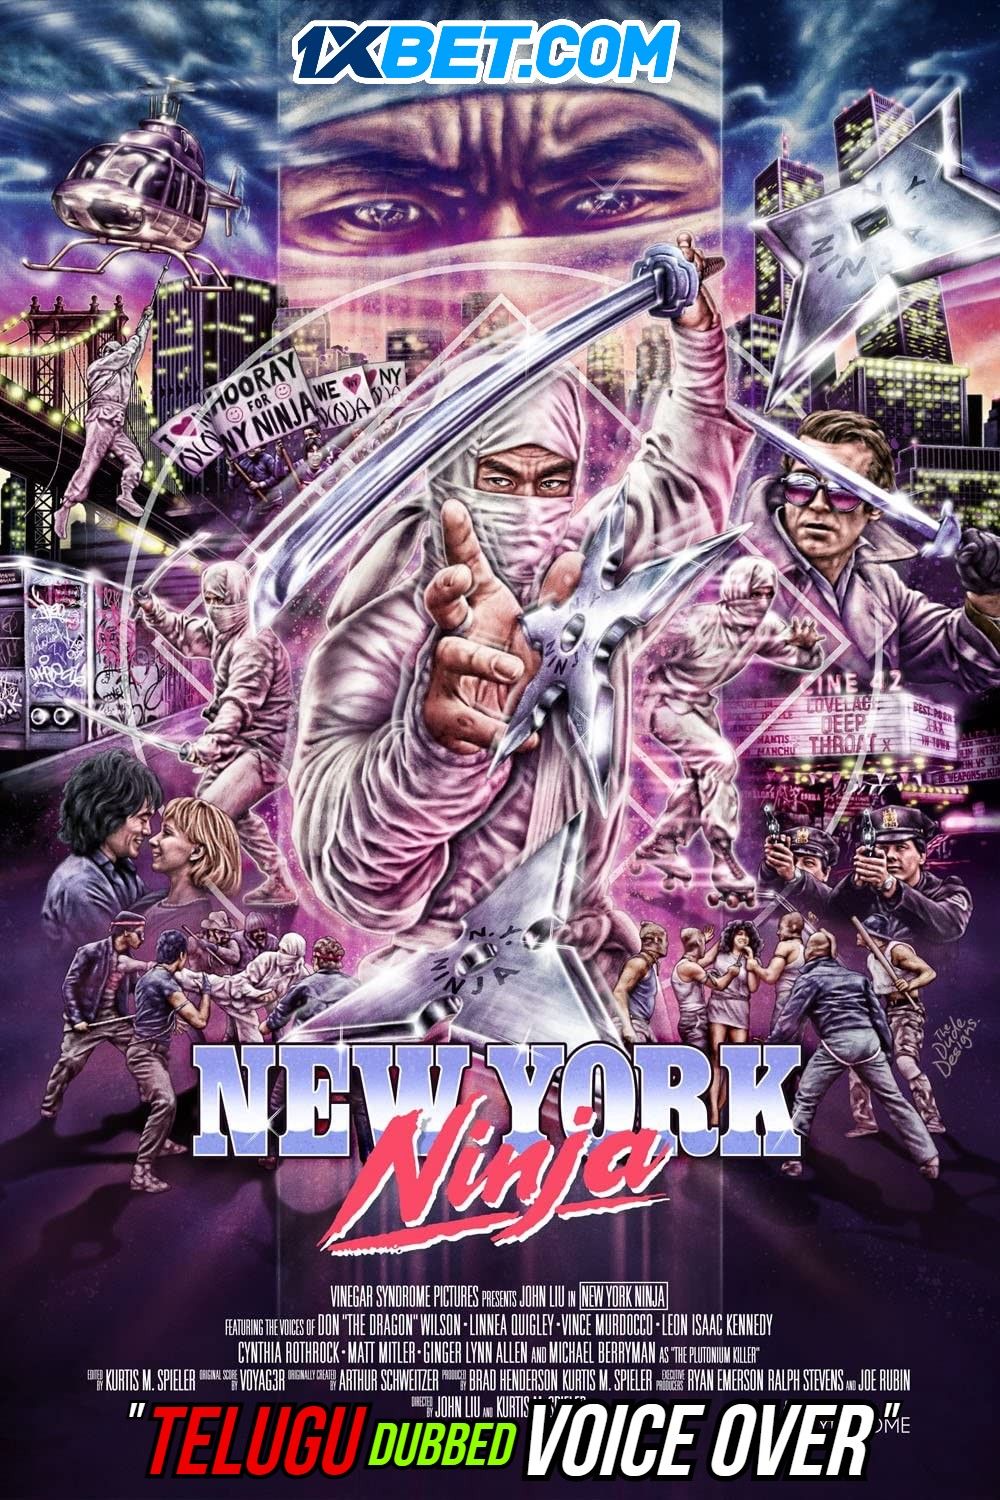 New York Ninja (2021) Telugu (Voice Over) Dubbed BluRay download full movie